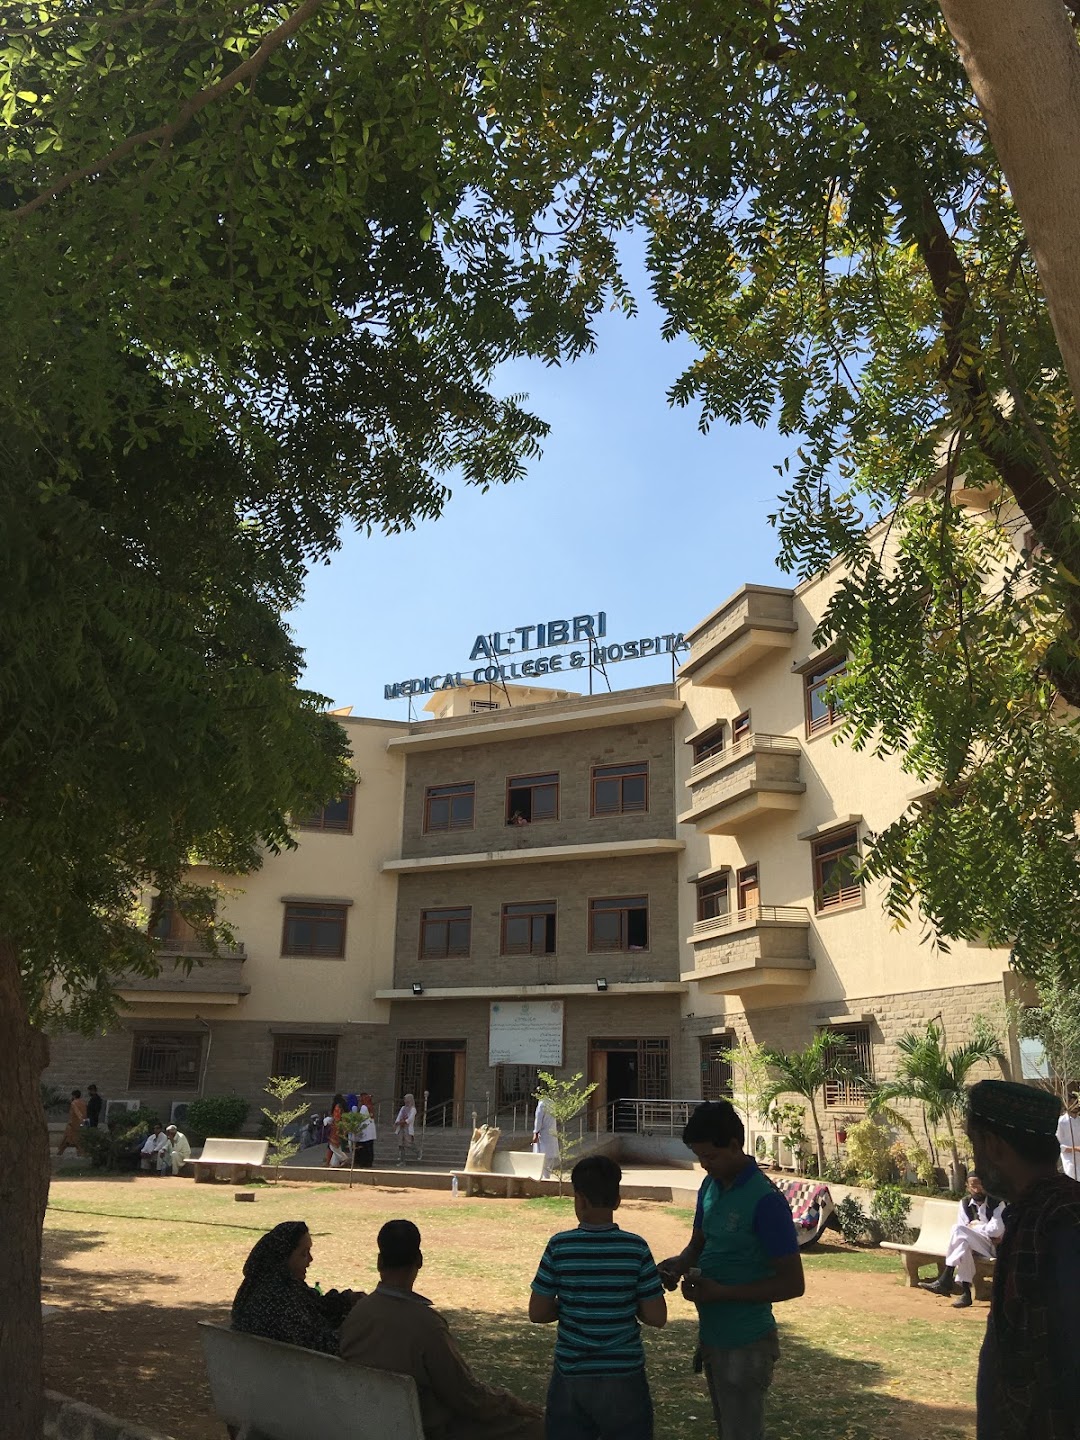 Al-Tibri Medical College